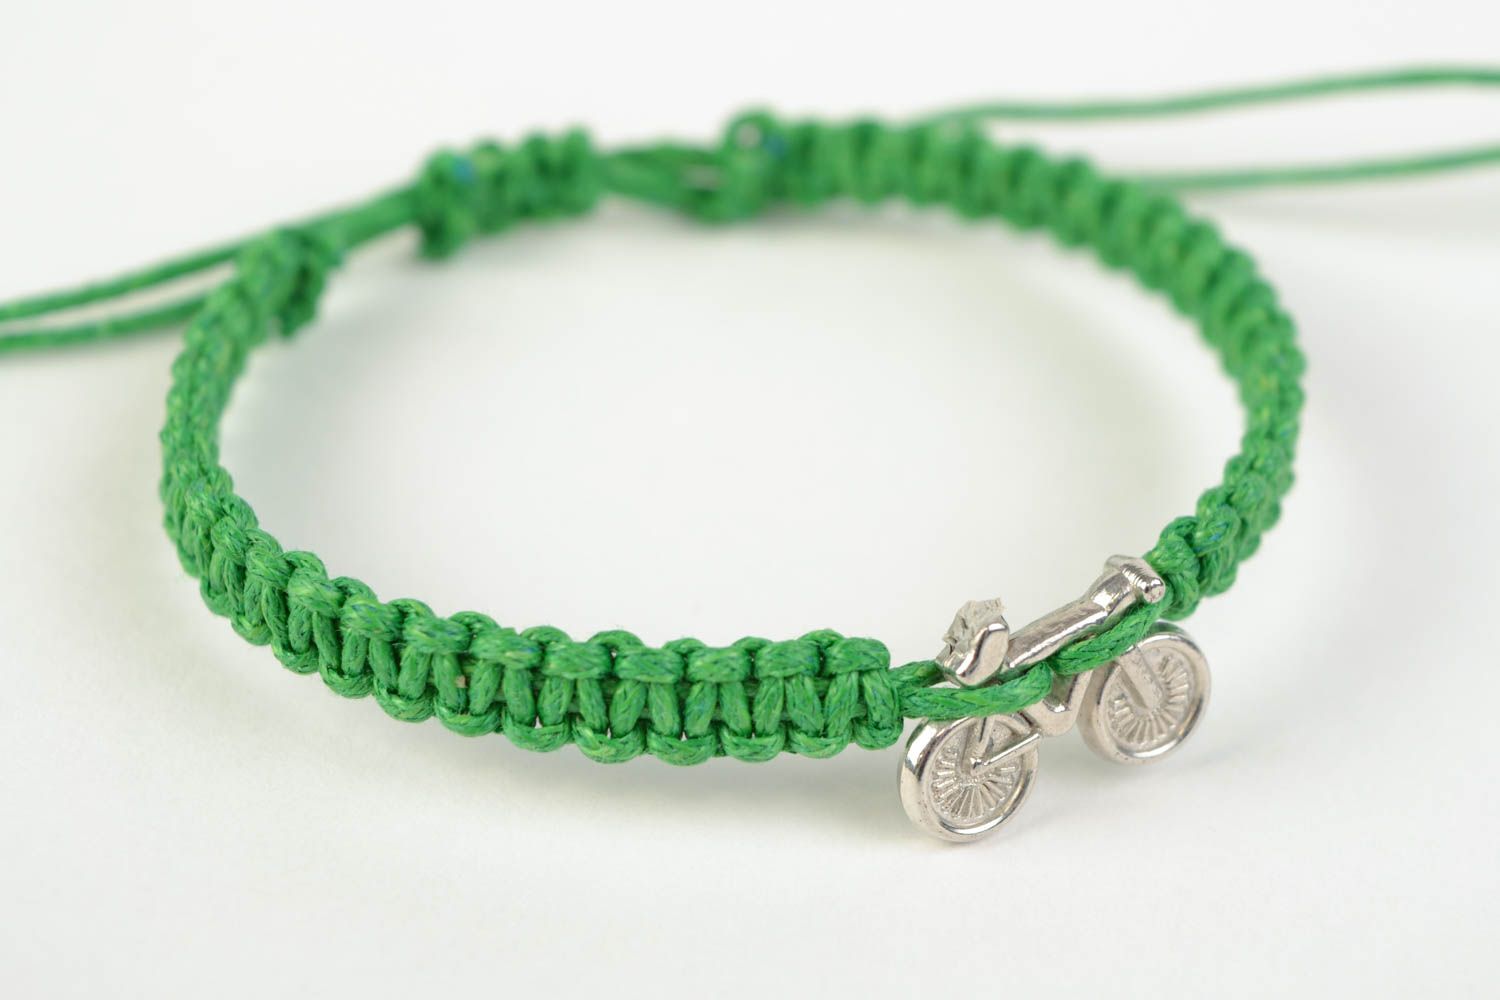 Handmade braided unisex stylish cord bracelet with charm Green Bicycle  photo 3